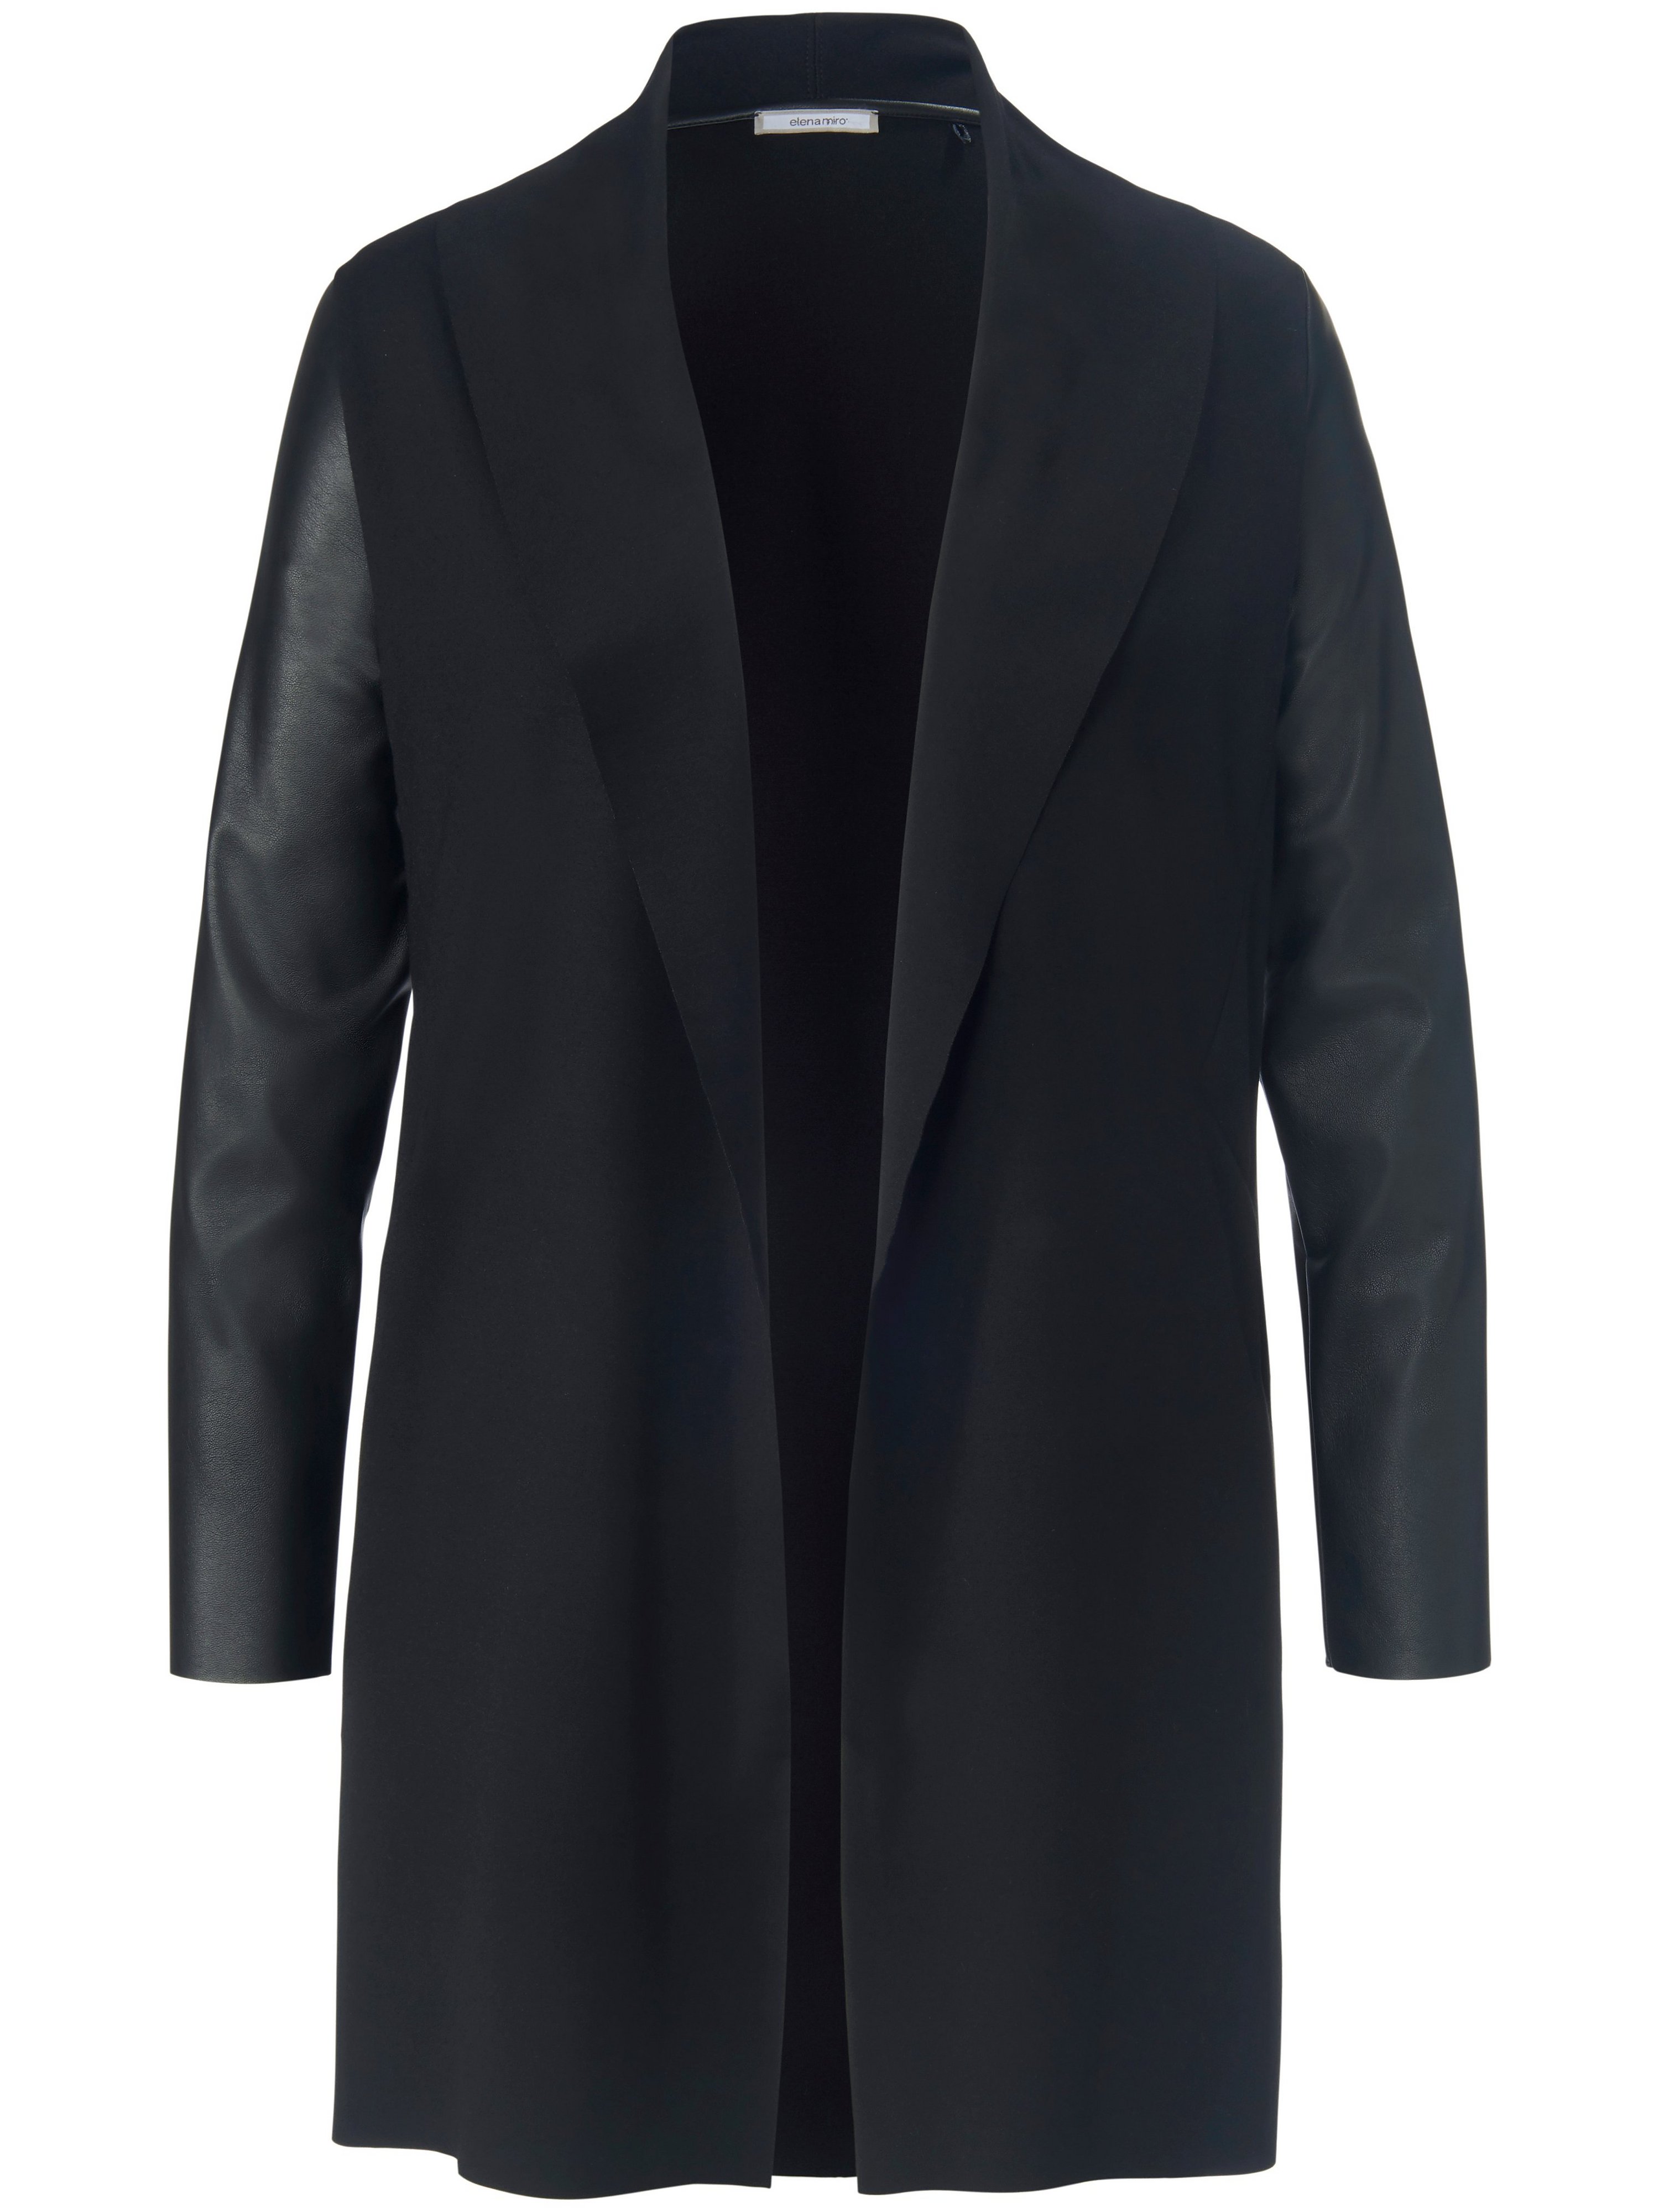 Le manteau coupe blazer confortable  Elena Miro noir